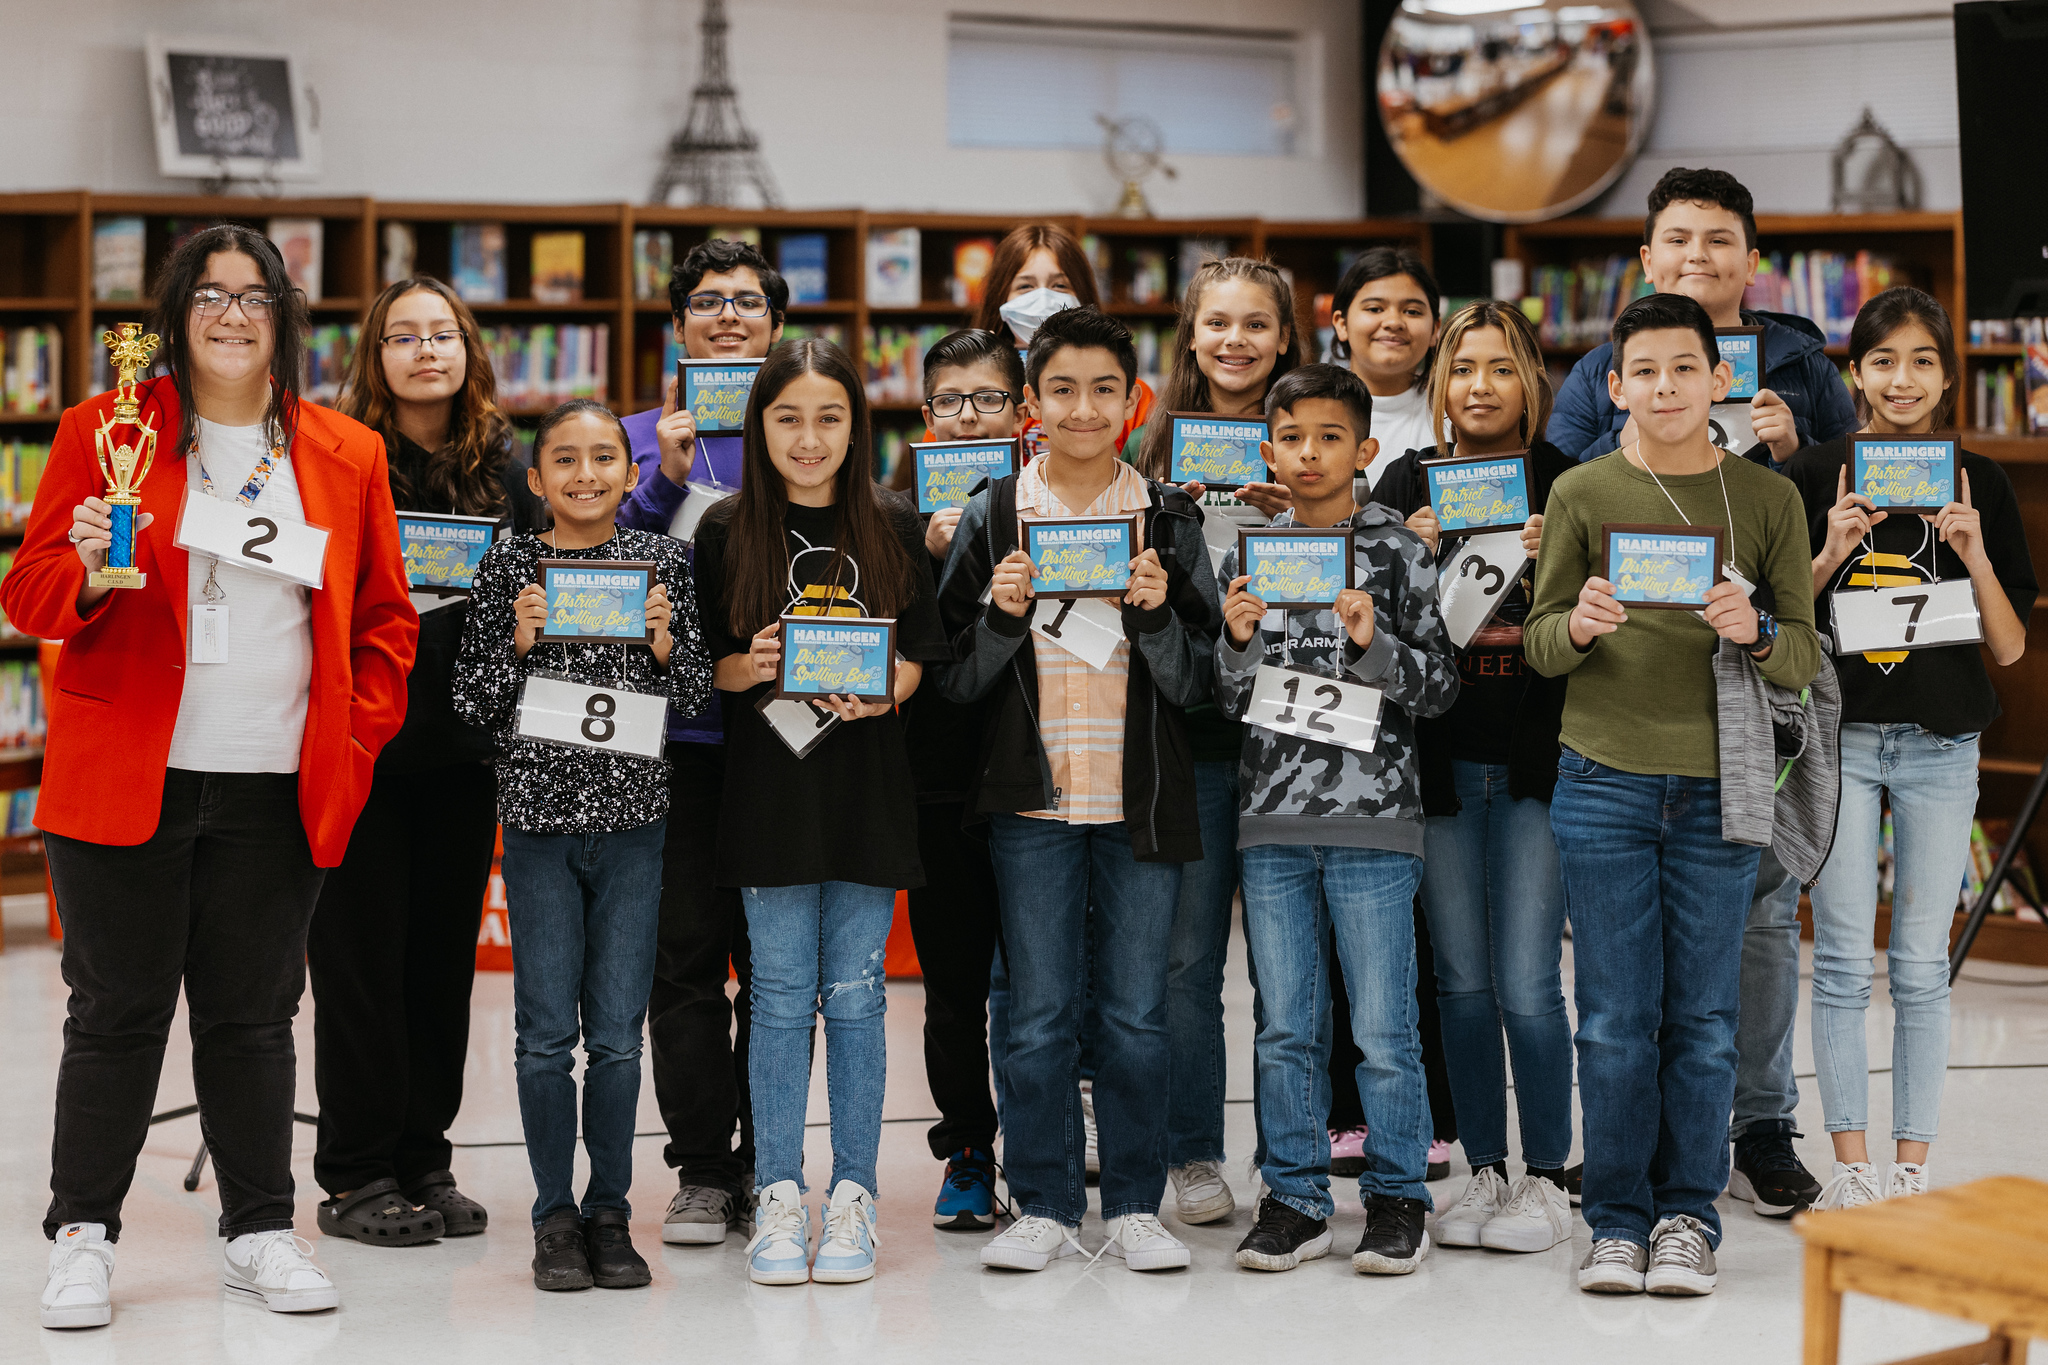 Memorial Middle School students wins District Spelling Bee